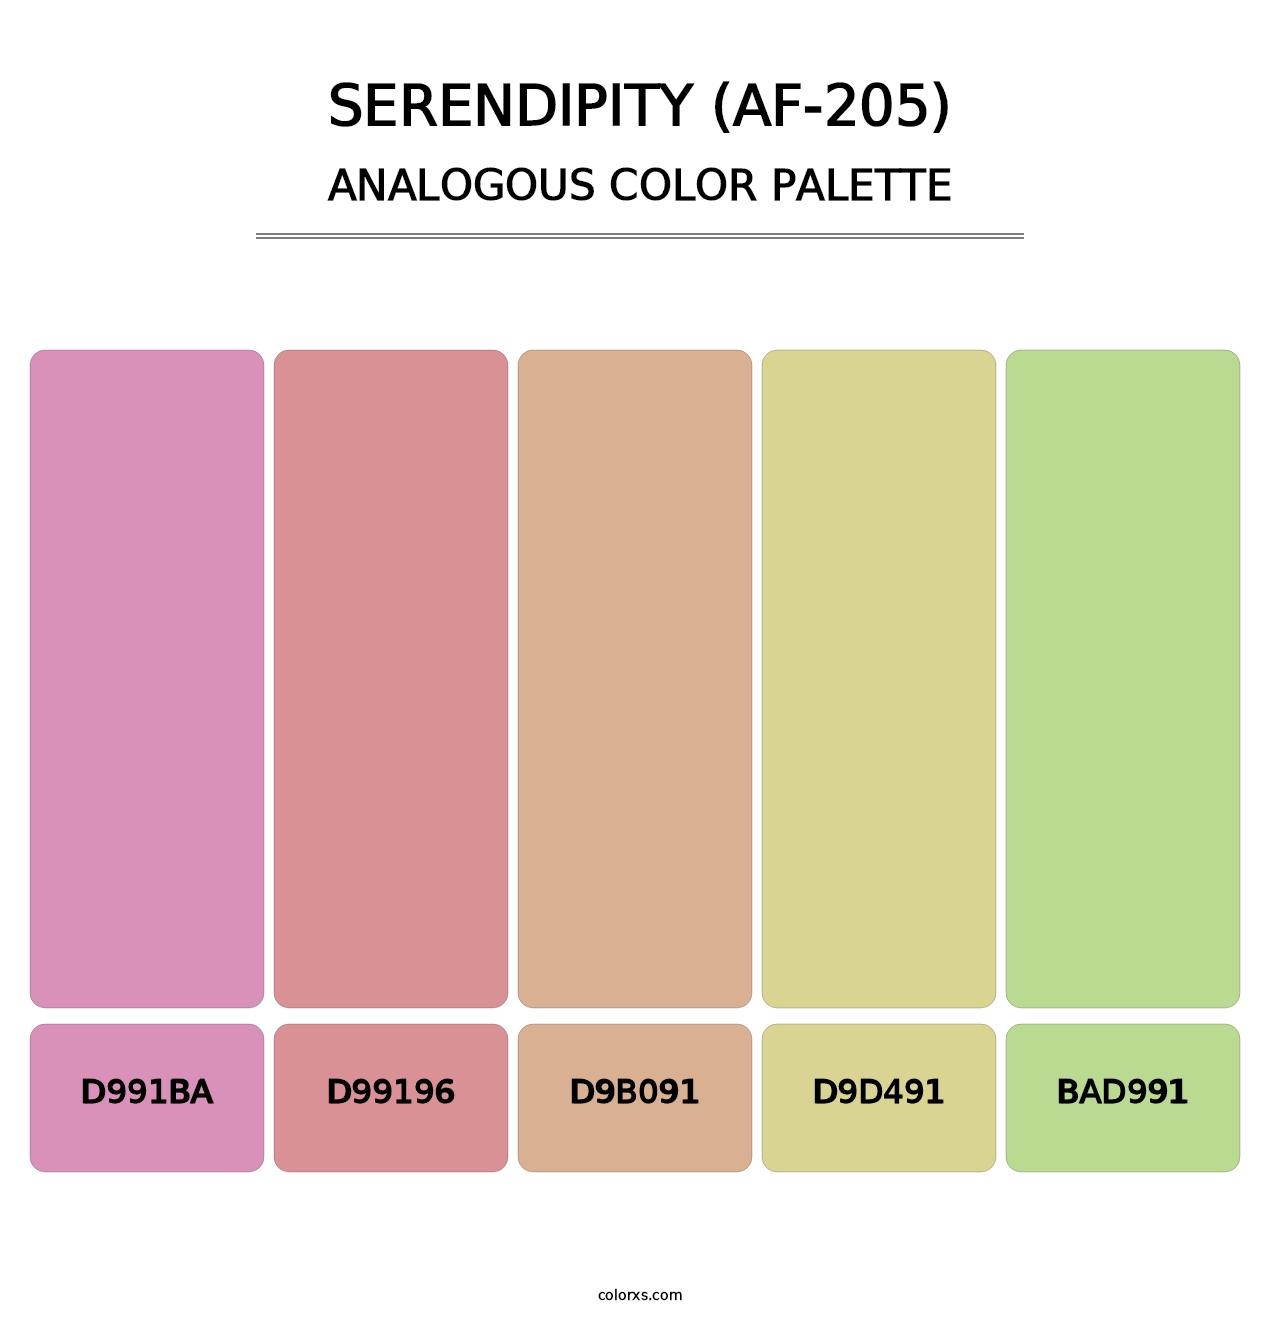 Serendipity (AF-205) - Analogous Color Palette